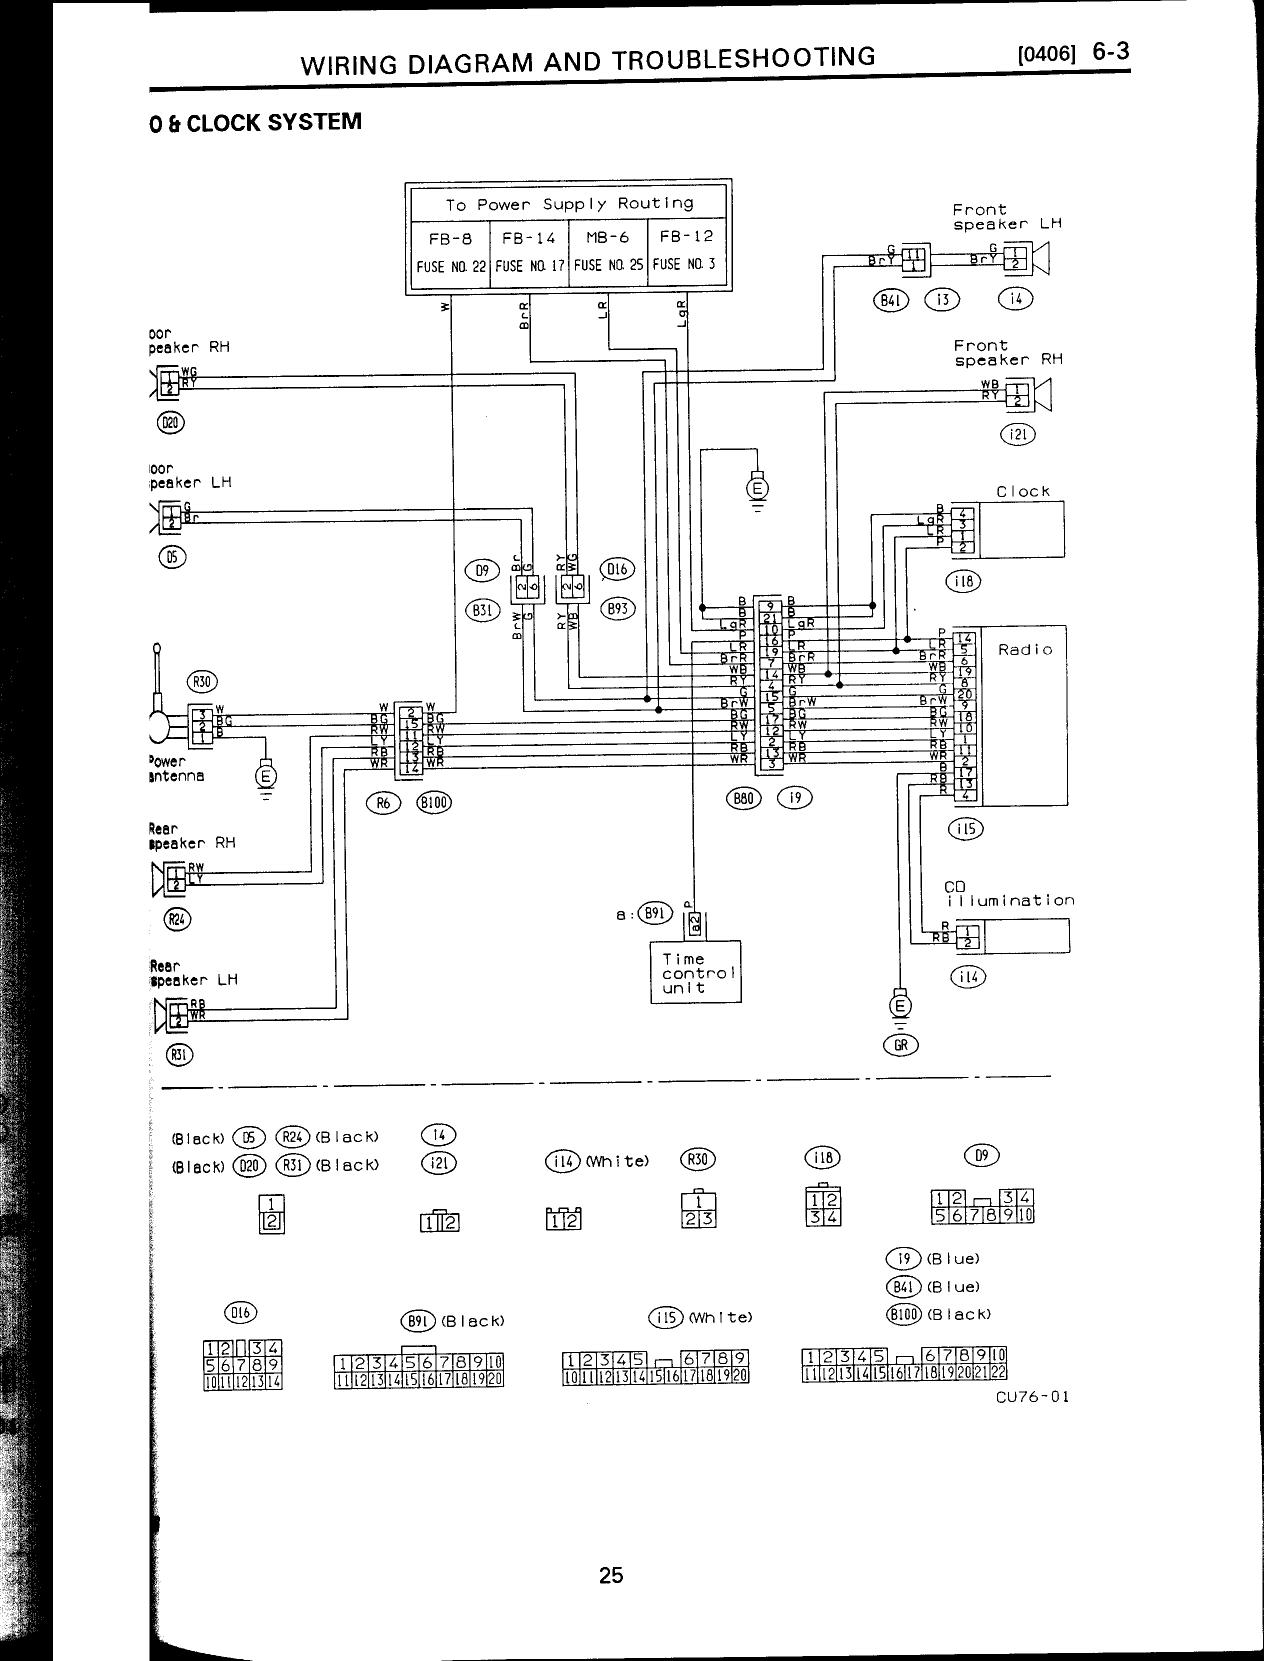 speaker wiring diagram???/ - The Subaru SVX World Network Audio Wiring Diagram The Subaru SVX World Network